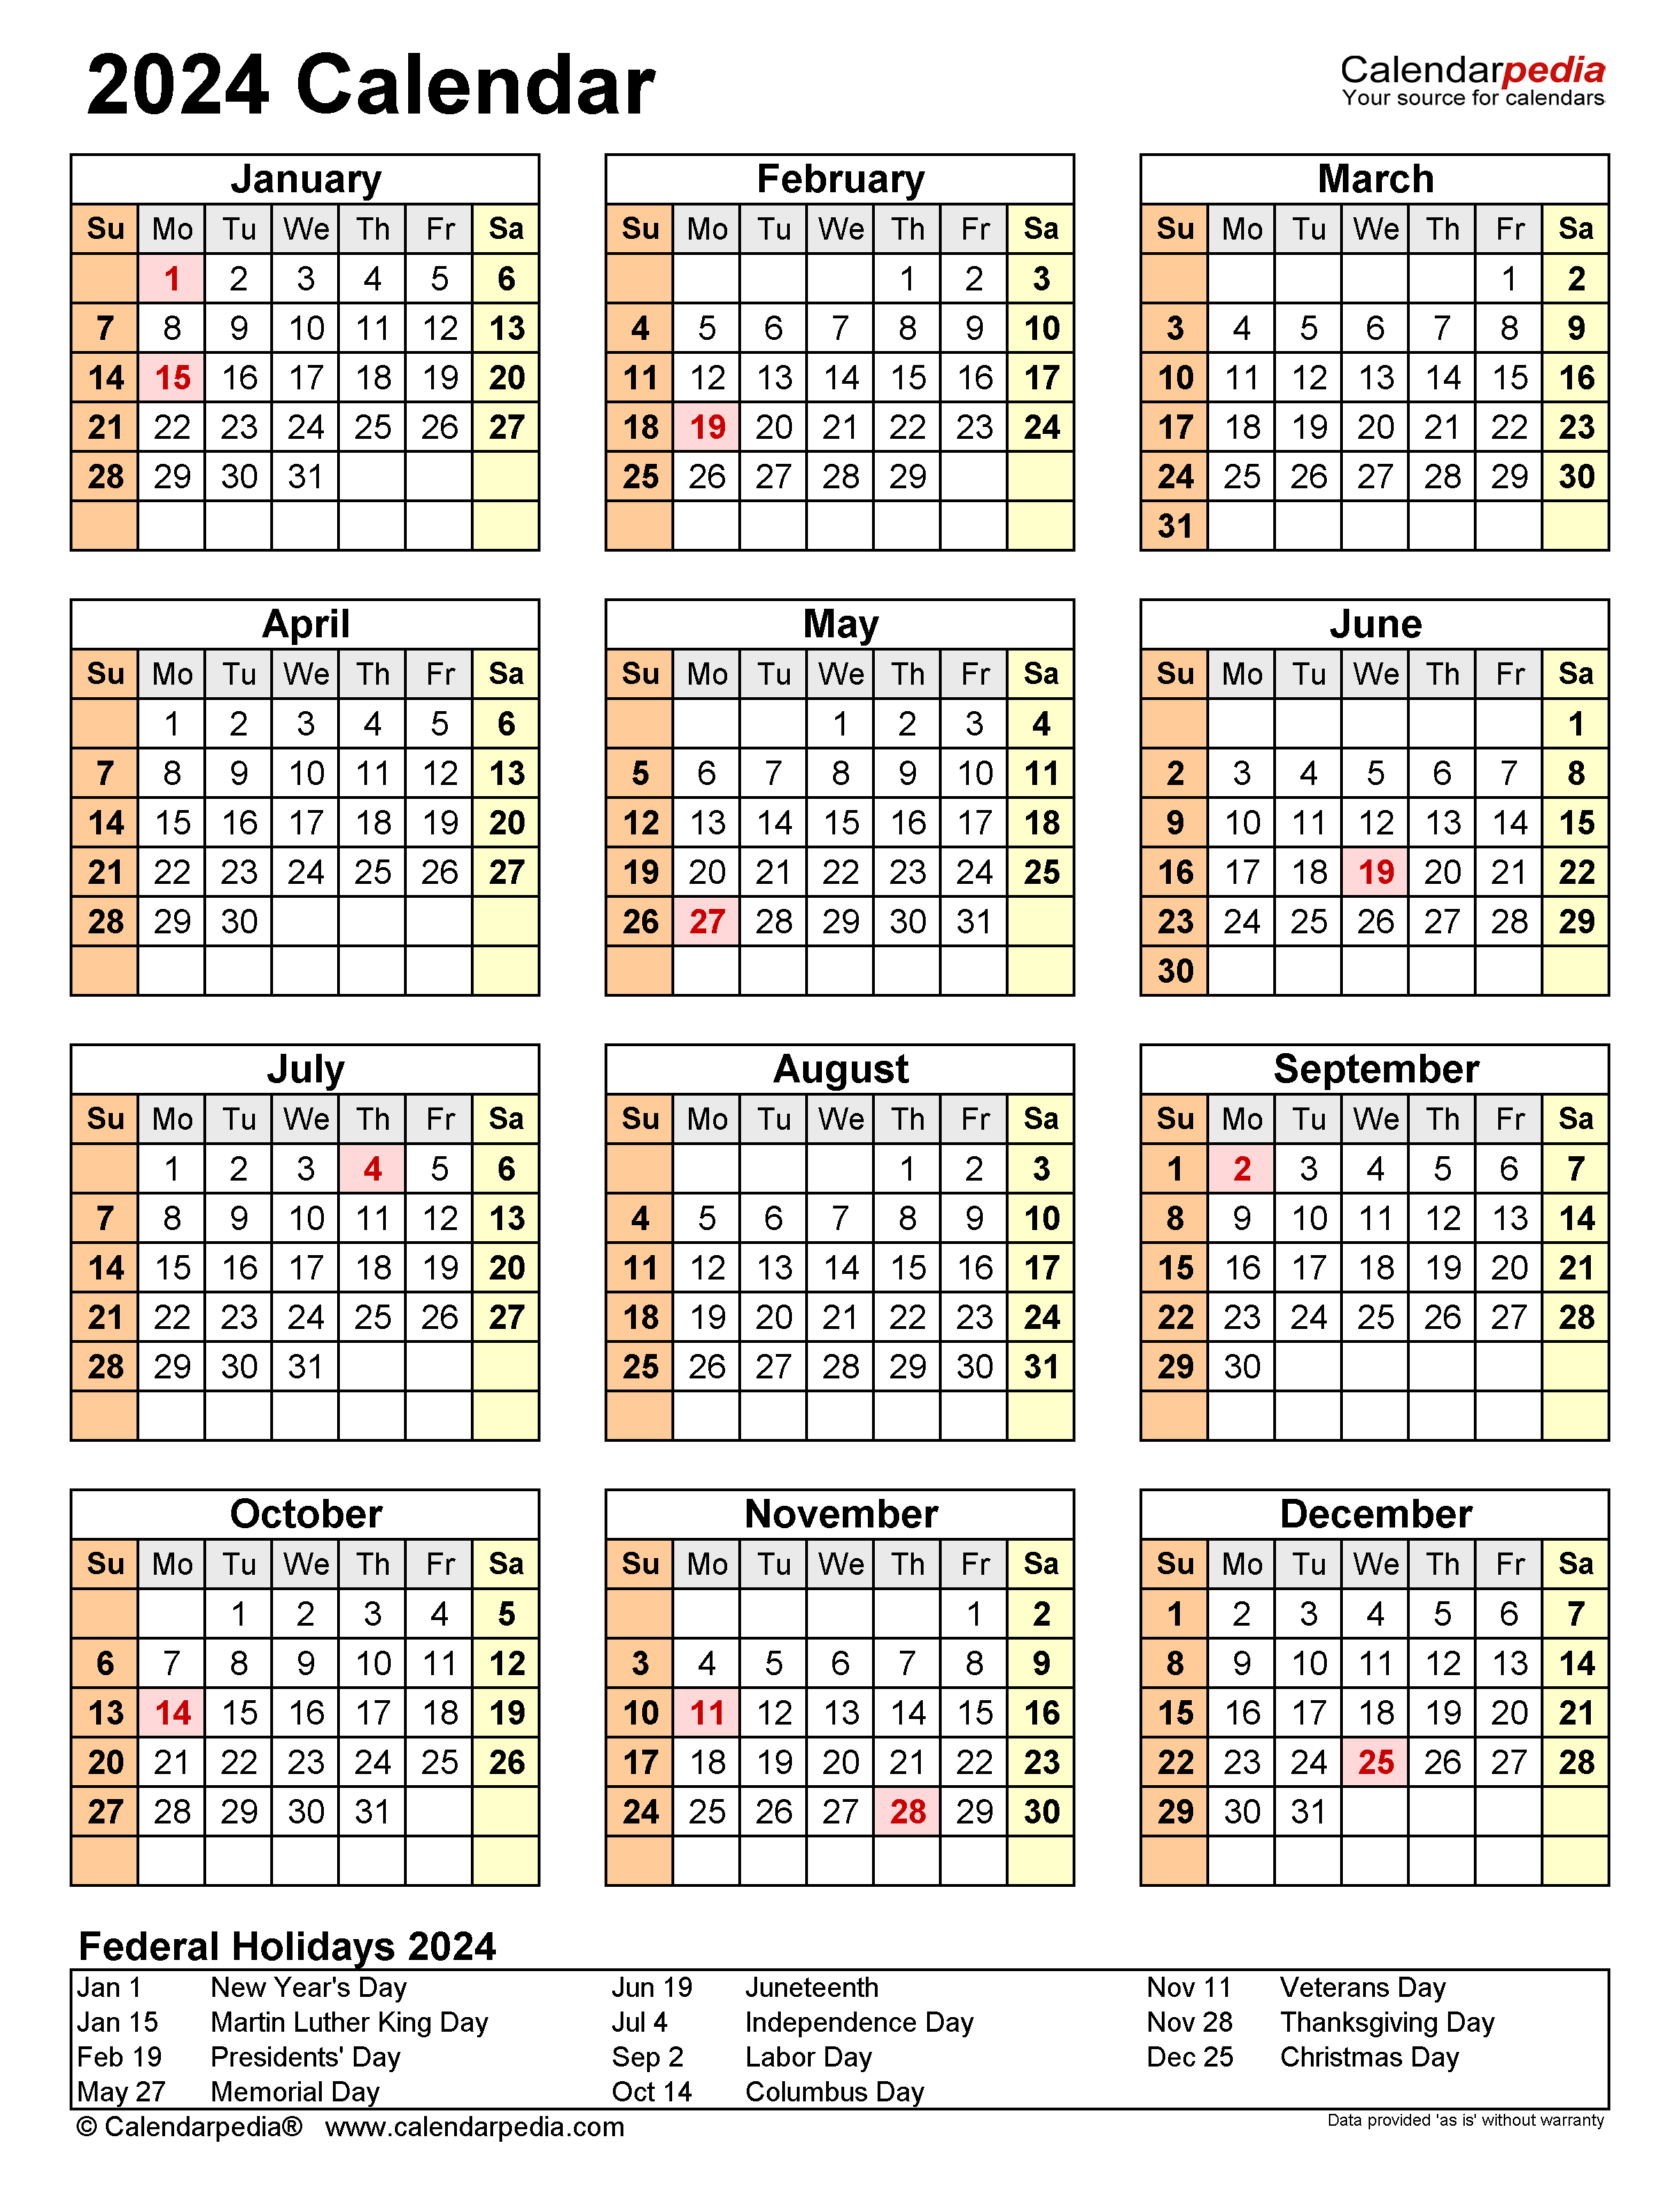 Free Printable 2024 Calendar With Holidays Crownflourmills - Free Printable 2024 Calendar With Holidays Singapore